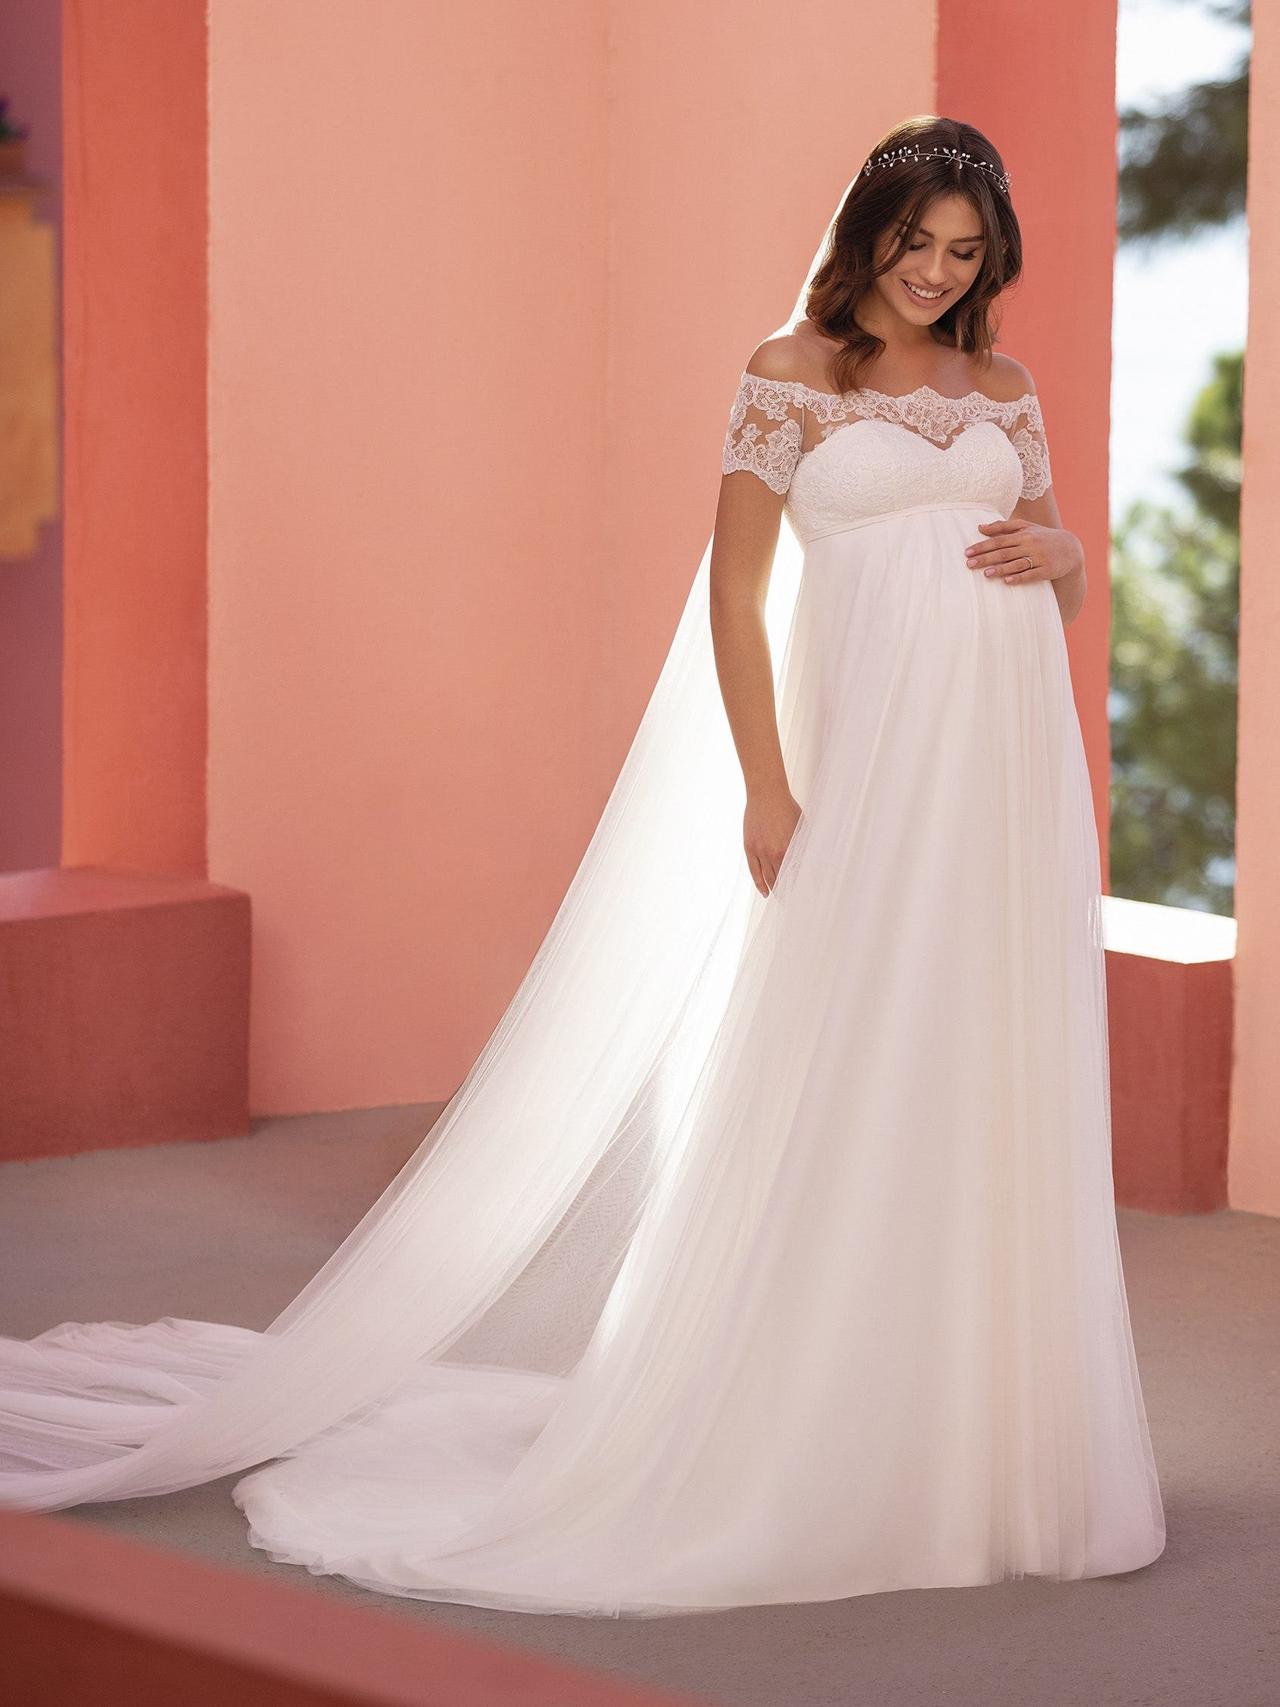 Vestidos de novia para embarazadas: todo debes buscar - bodas.com.mx